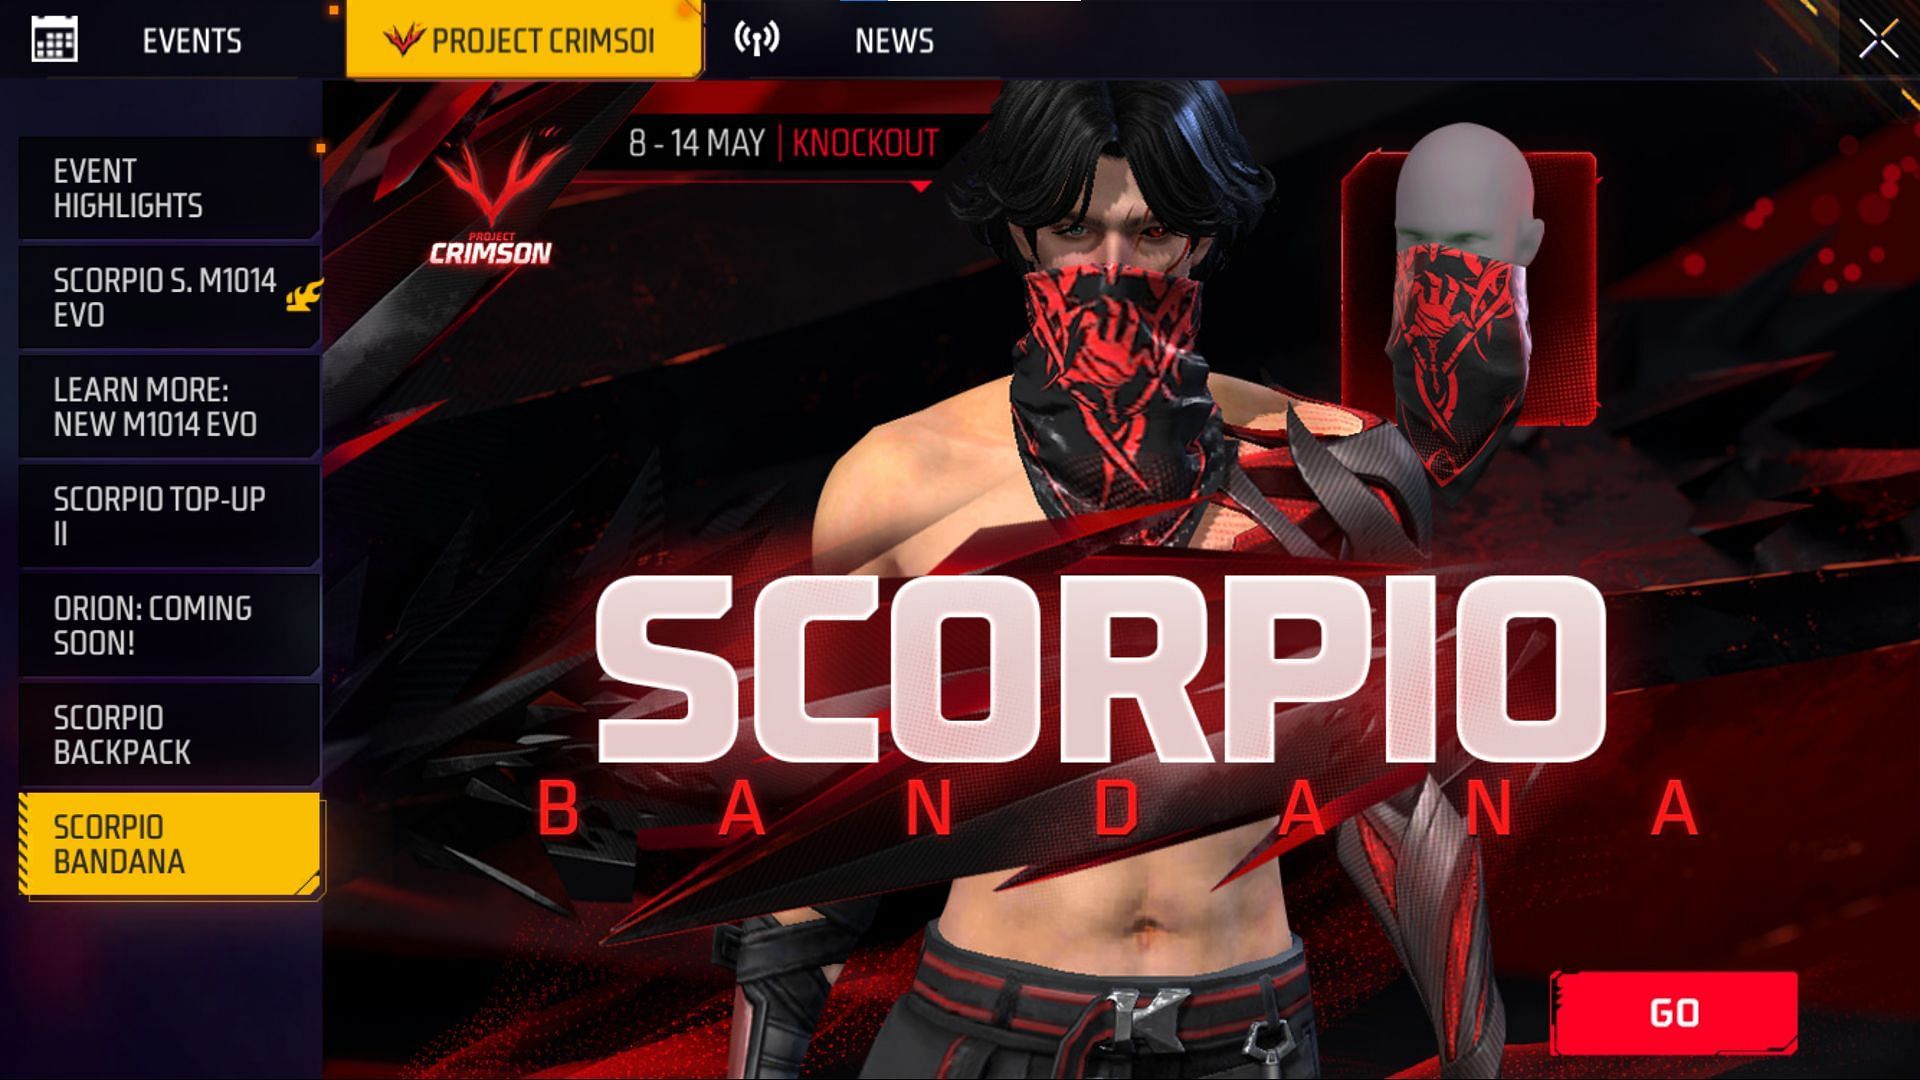 Scorpio Bandana is also available in a separate event (Image via Garena)